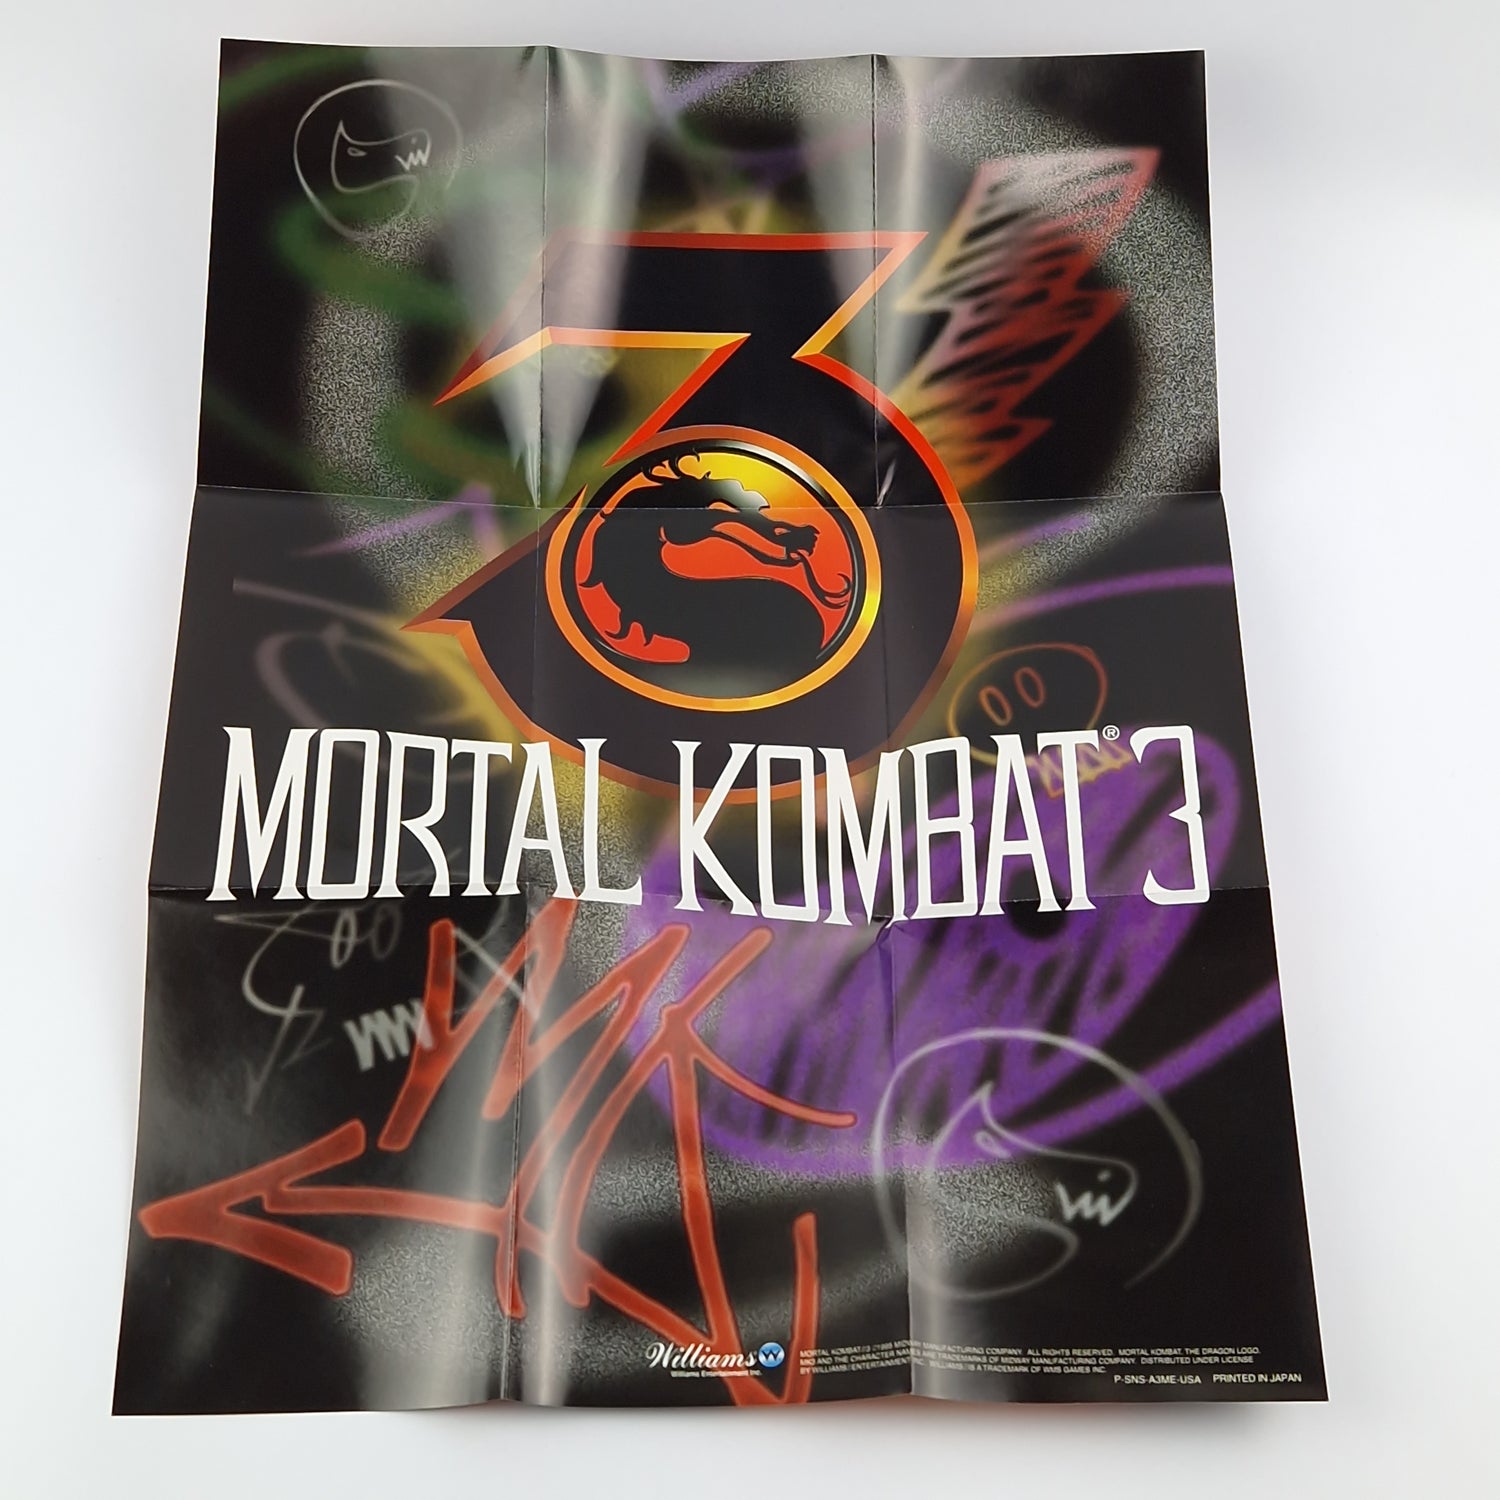 Super Nintendo Game: Mortal Kombat 3 - Cartridge Manual Box OVP | SNES USA